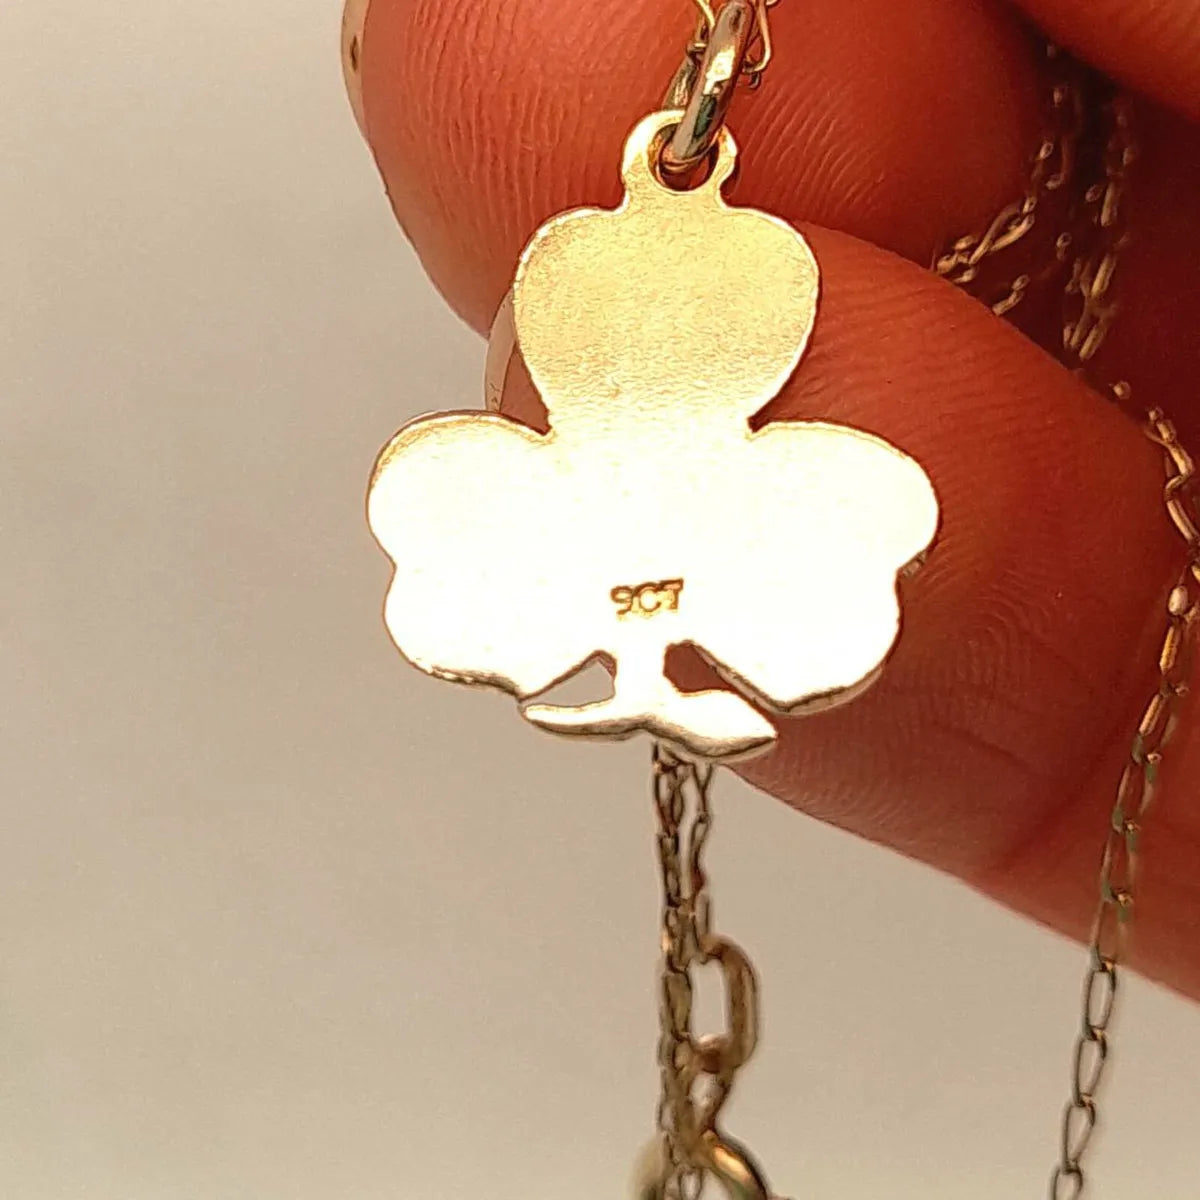 3 Leaf Irish Clover Pendant & Chain, 9k Rose Gold